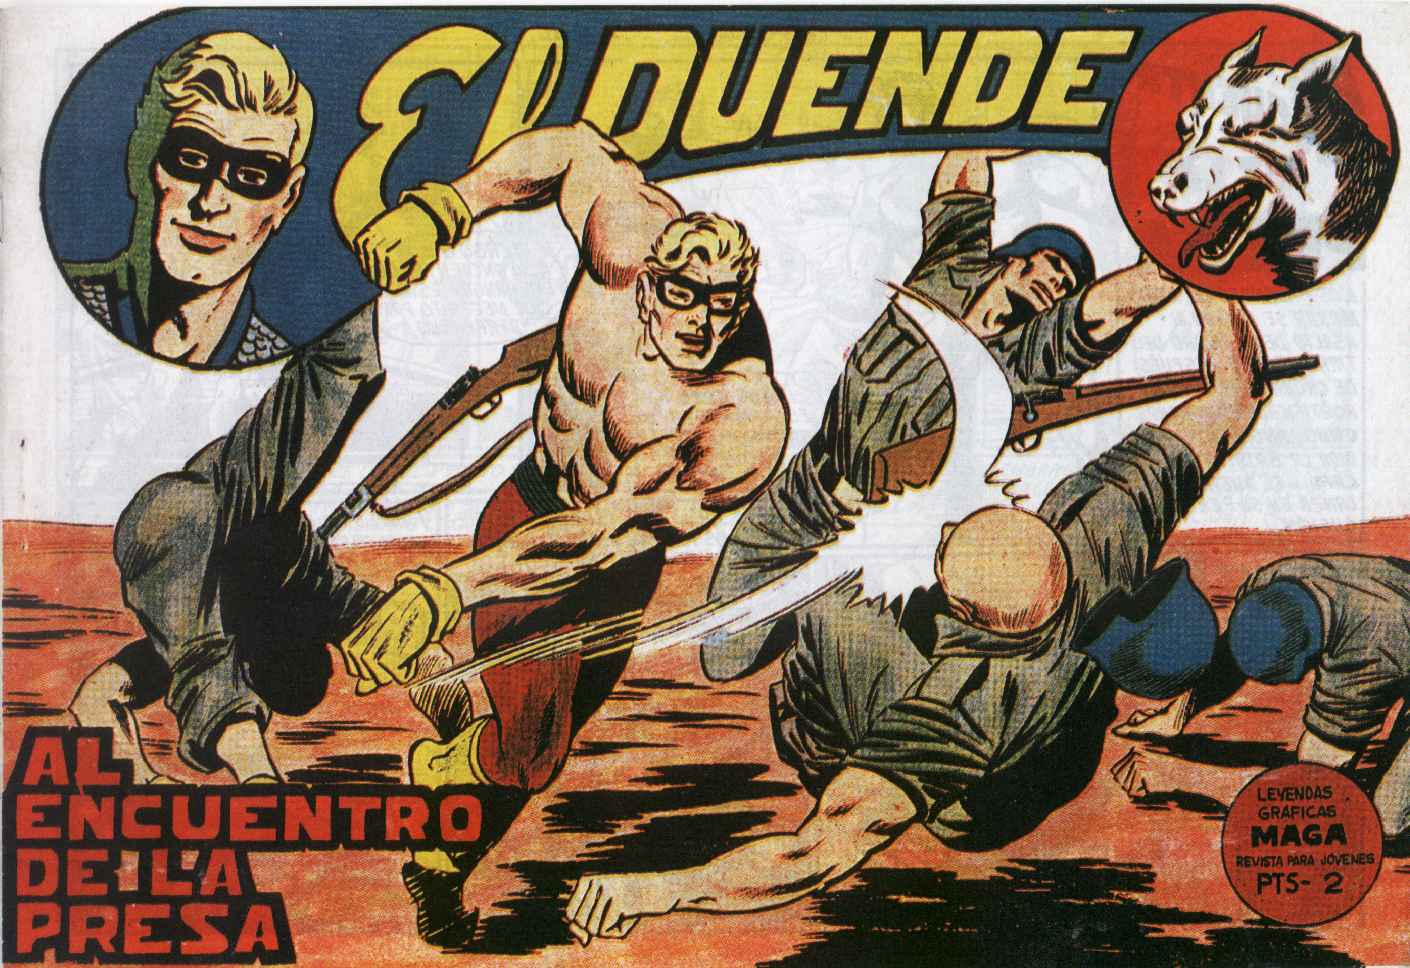 Comic Book Cover For El Duende 28 - Al encuentro de la presa